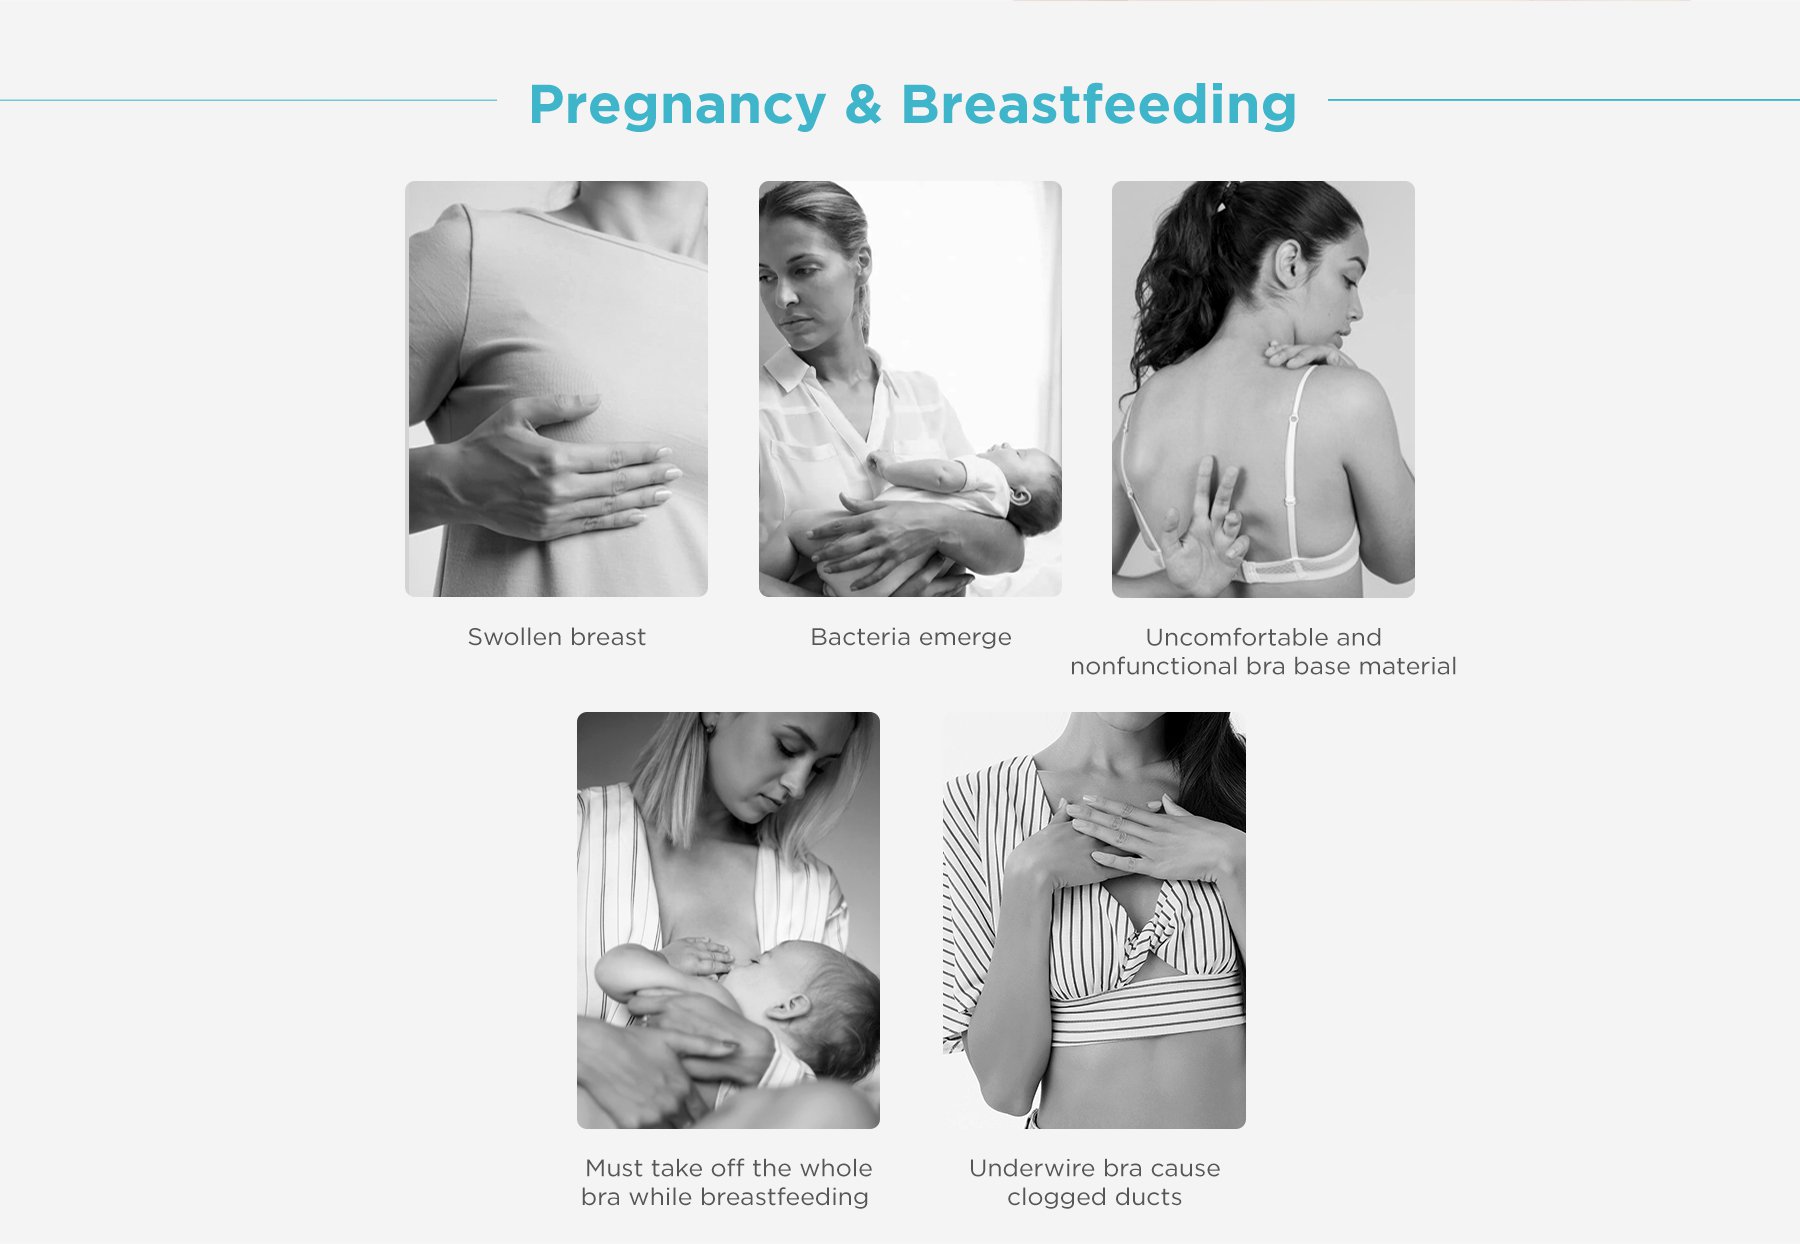 MOOIMOM Comfort Crossover Maternity & Nursing Bra description image